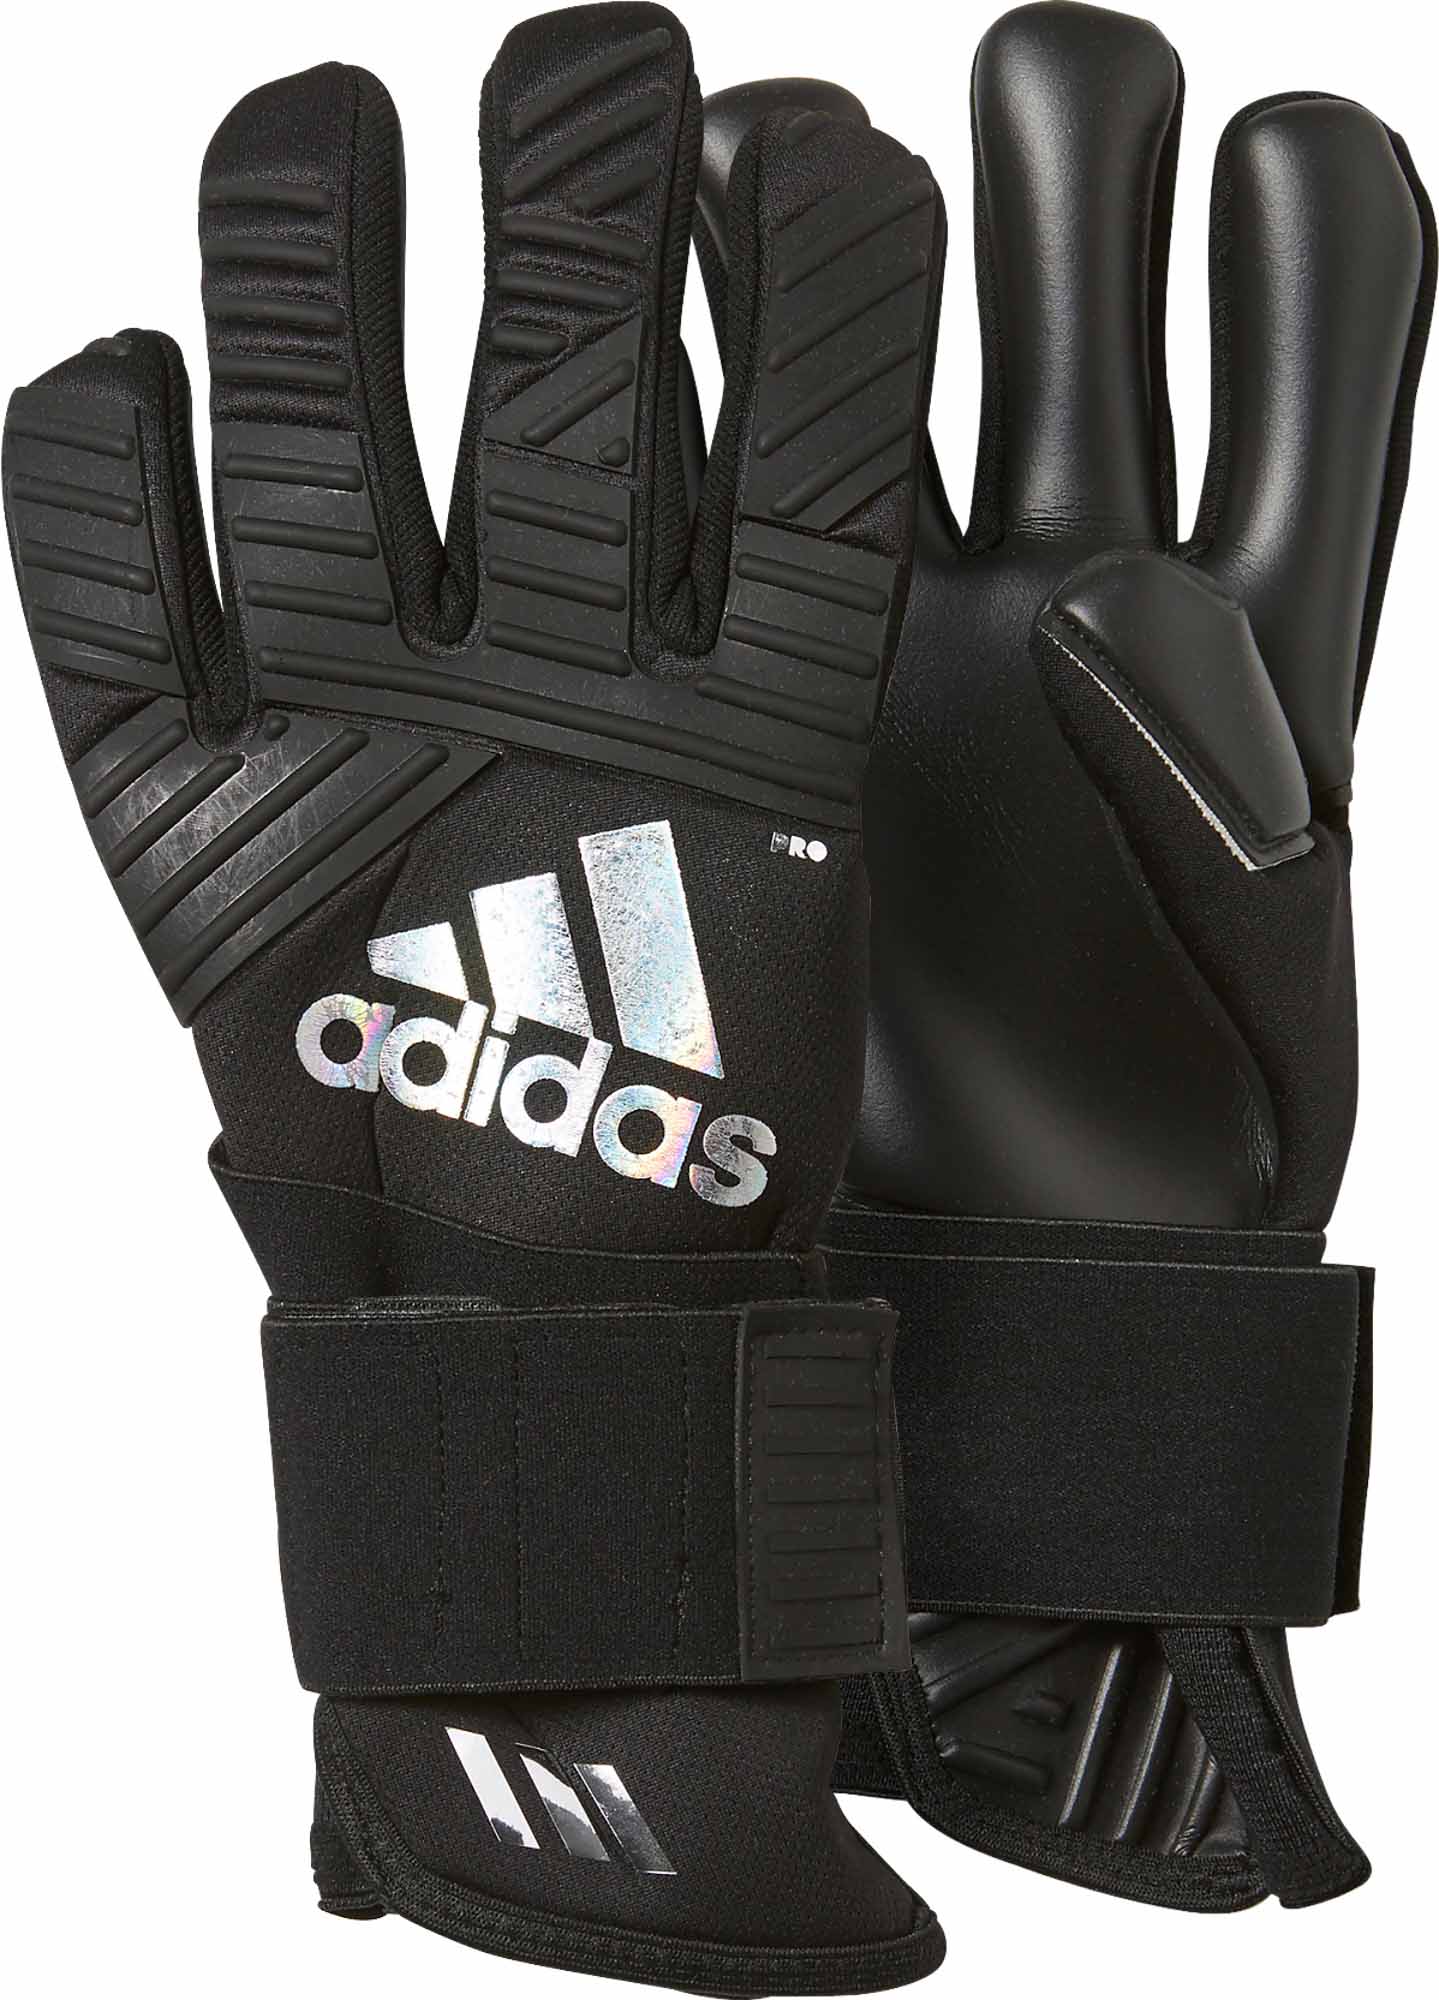 adidas goalkeeper gloves size 6